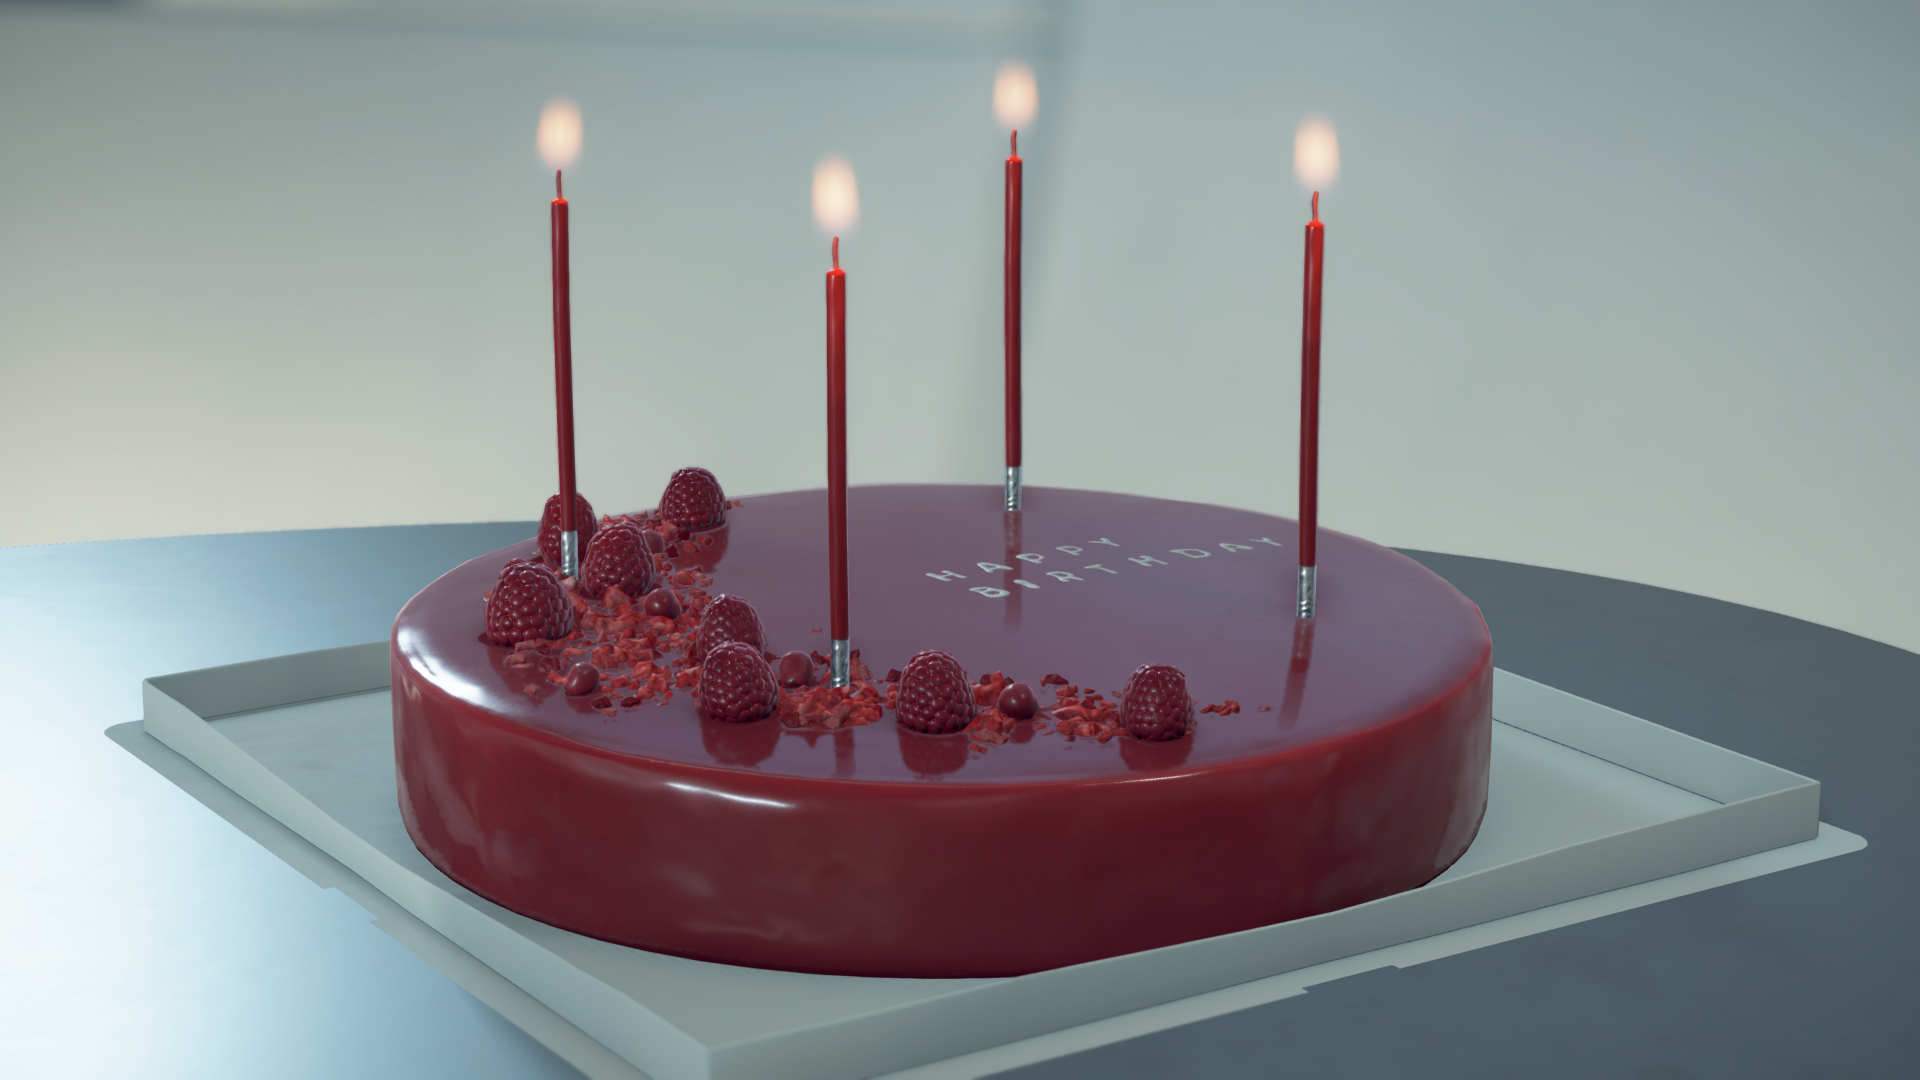 General 1920x1080 Kojima Productions Death Stranding video games screen shot cake birthday raspberries red food CGI candles